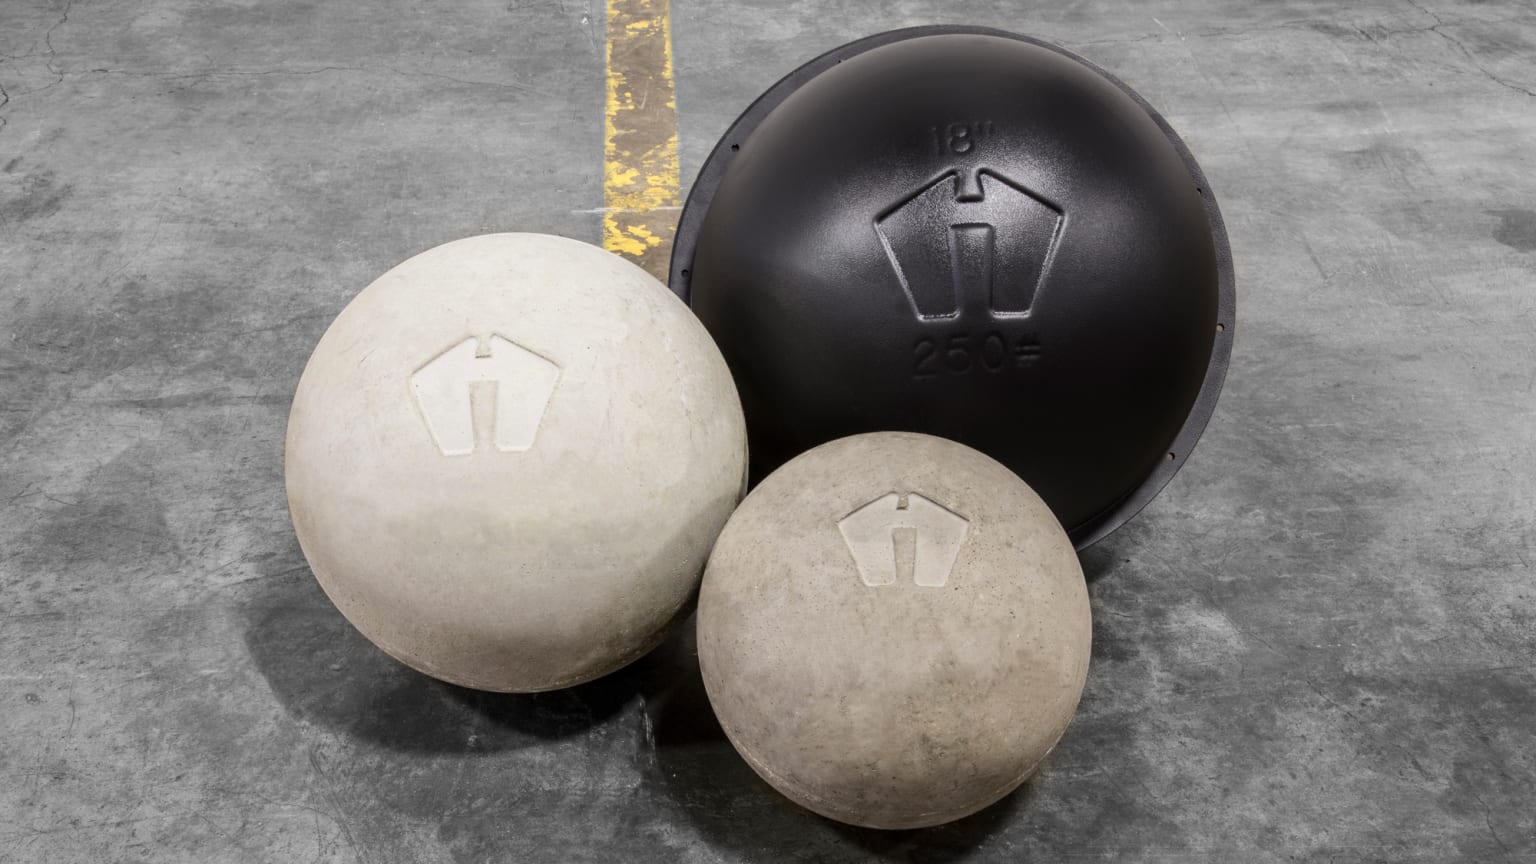 10" Atlas Stone Mold for Crossfit Strength Training Concrete Ball Sphere 